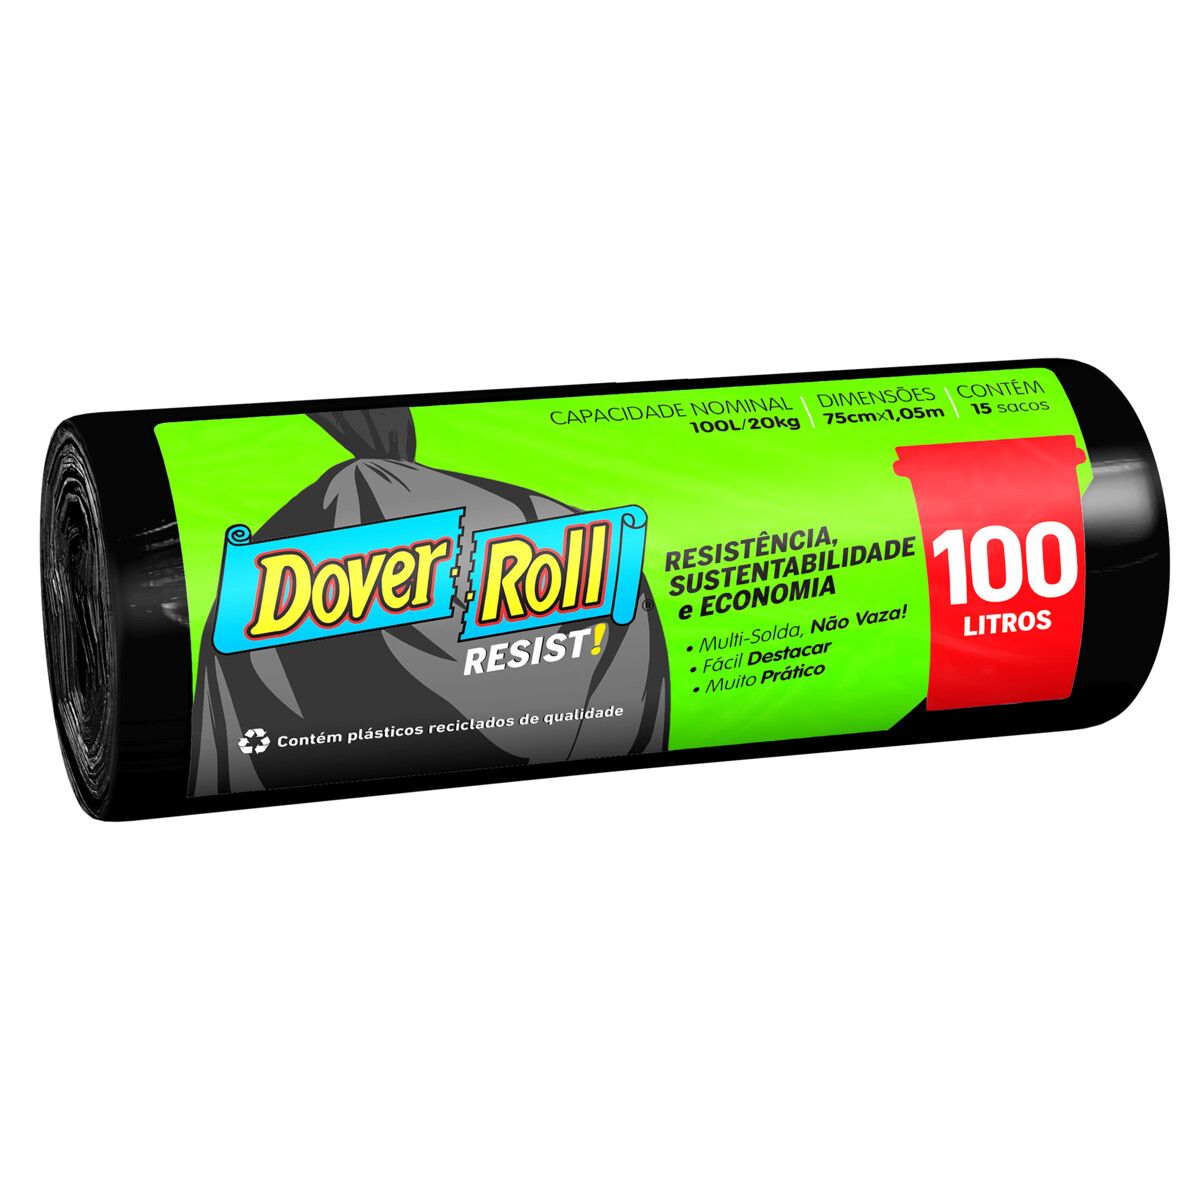 Saco para Lixo Dover Roll 100L Resist 15 Unidades image number 4